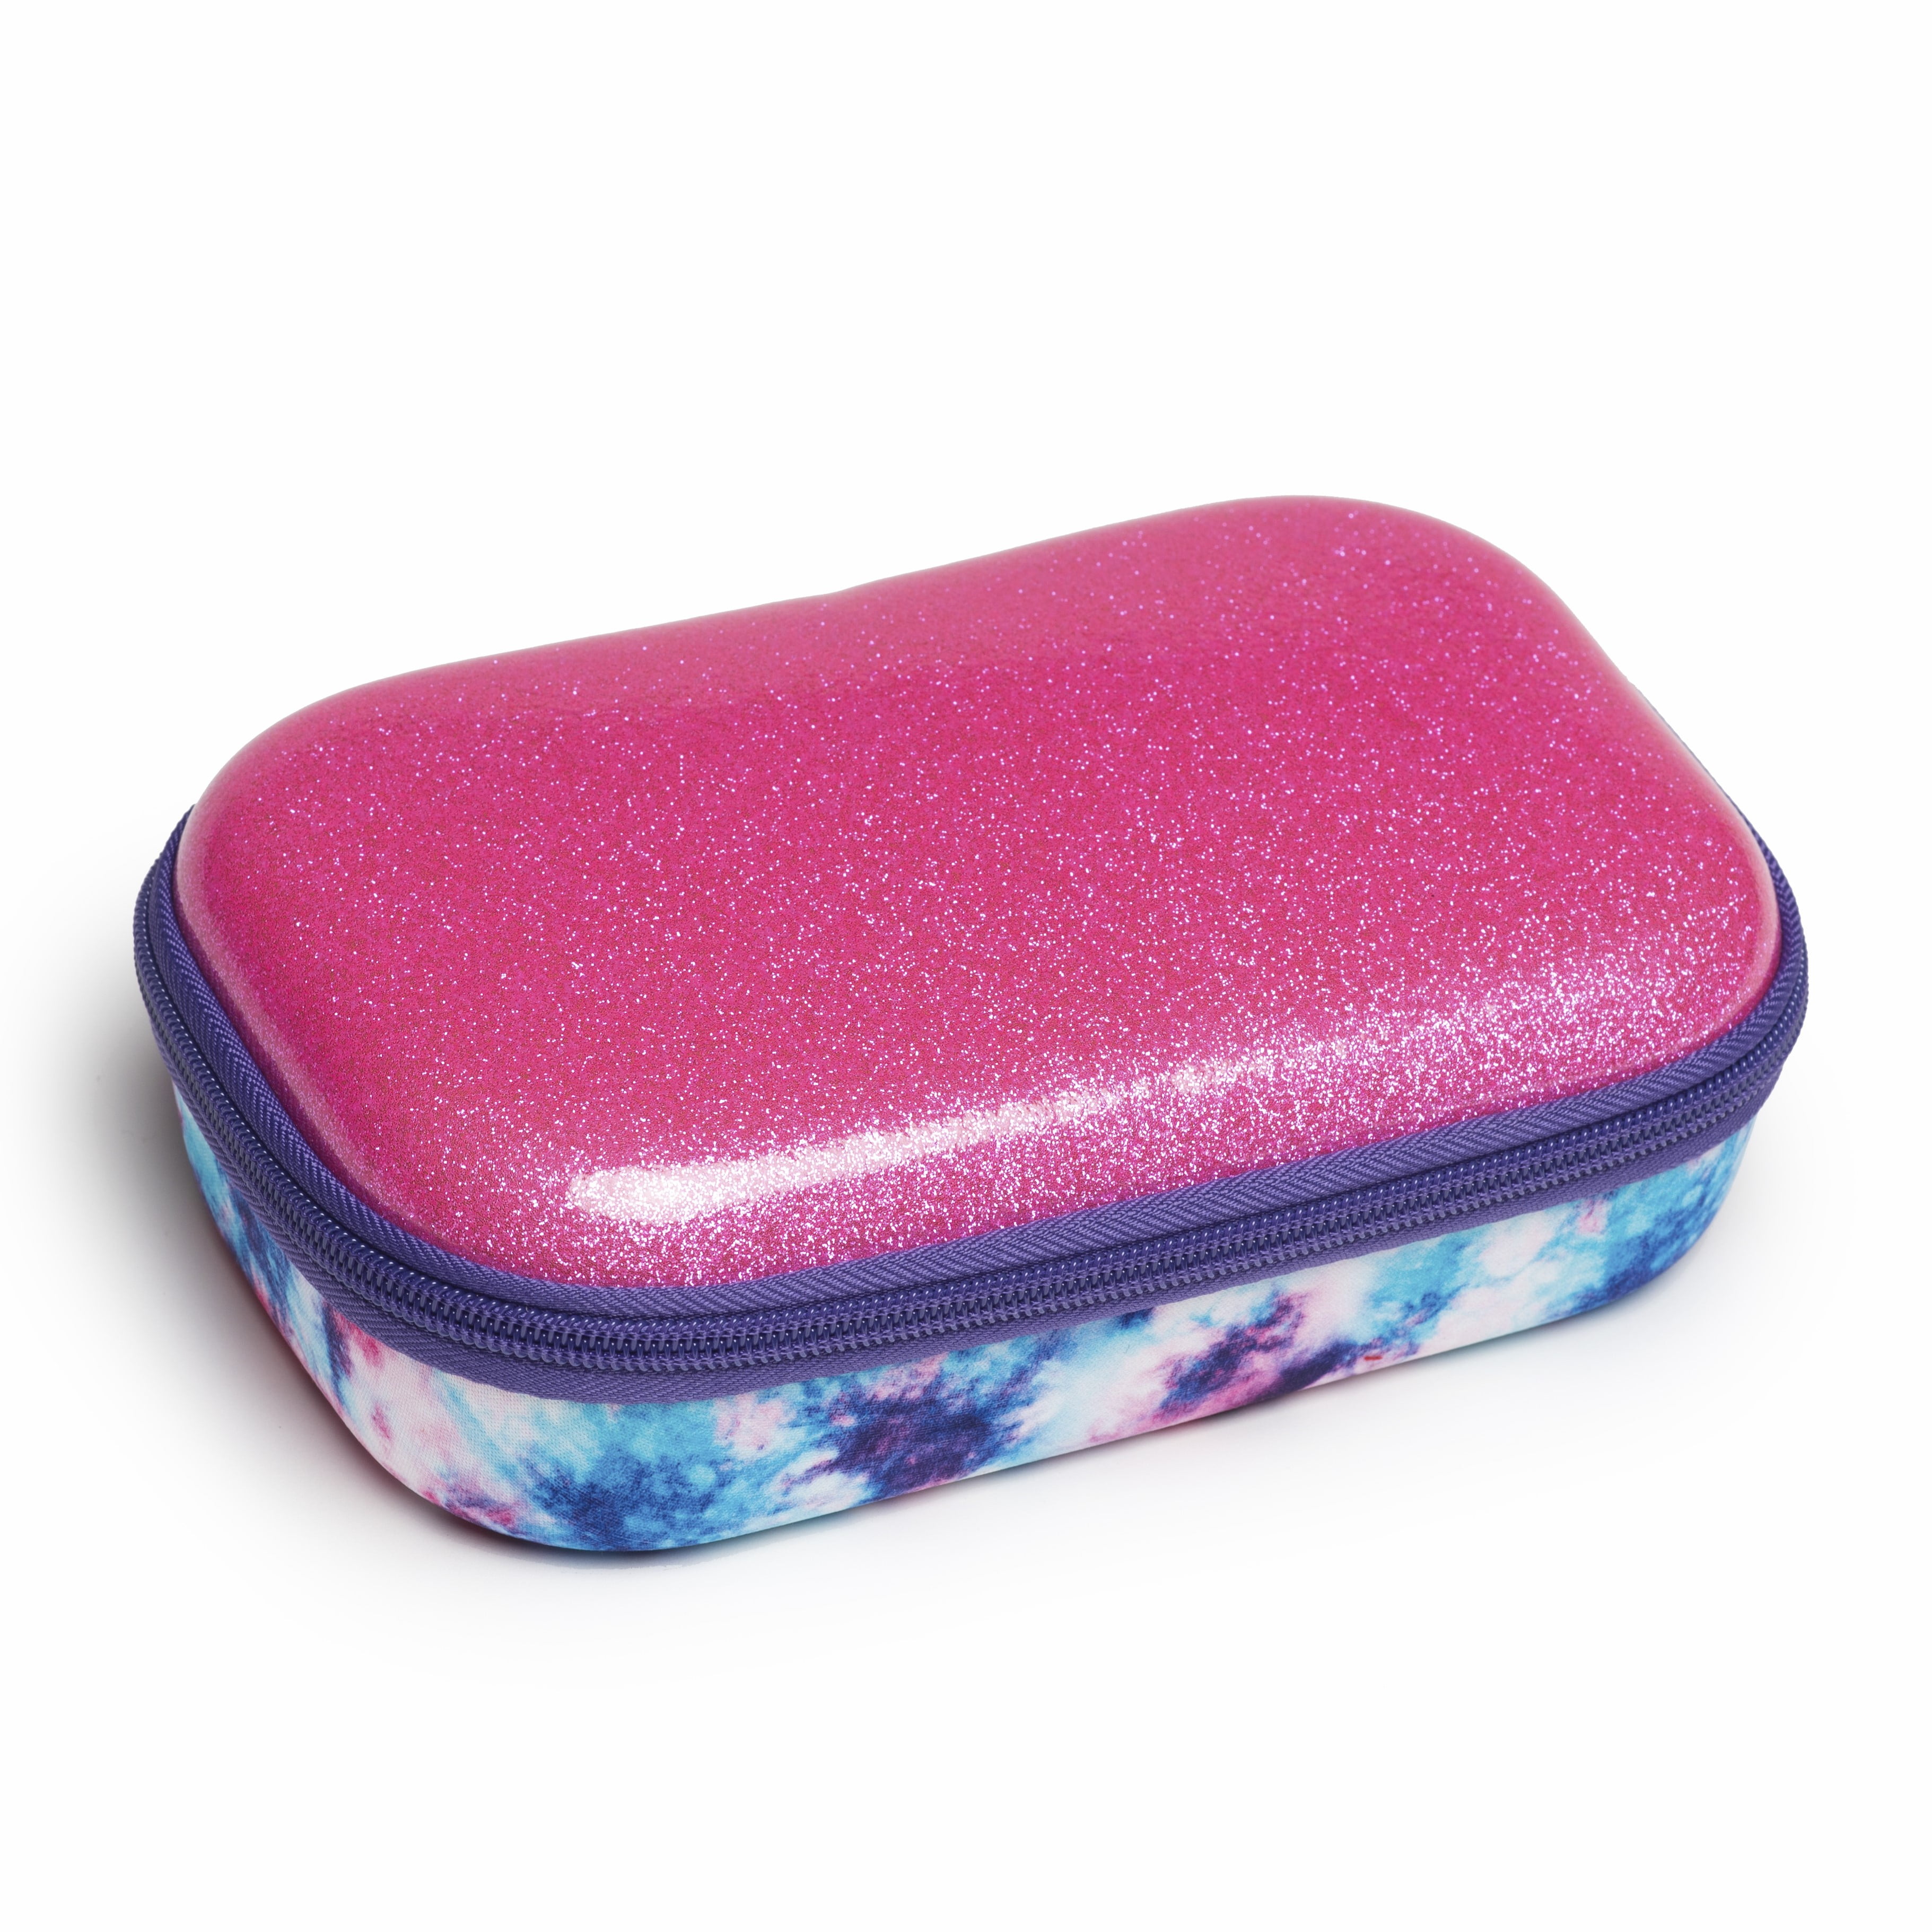 Sterilite Pencil Box Pink Glitter 2-Pack